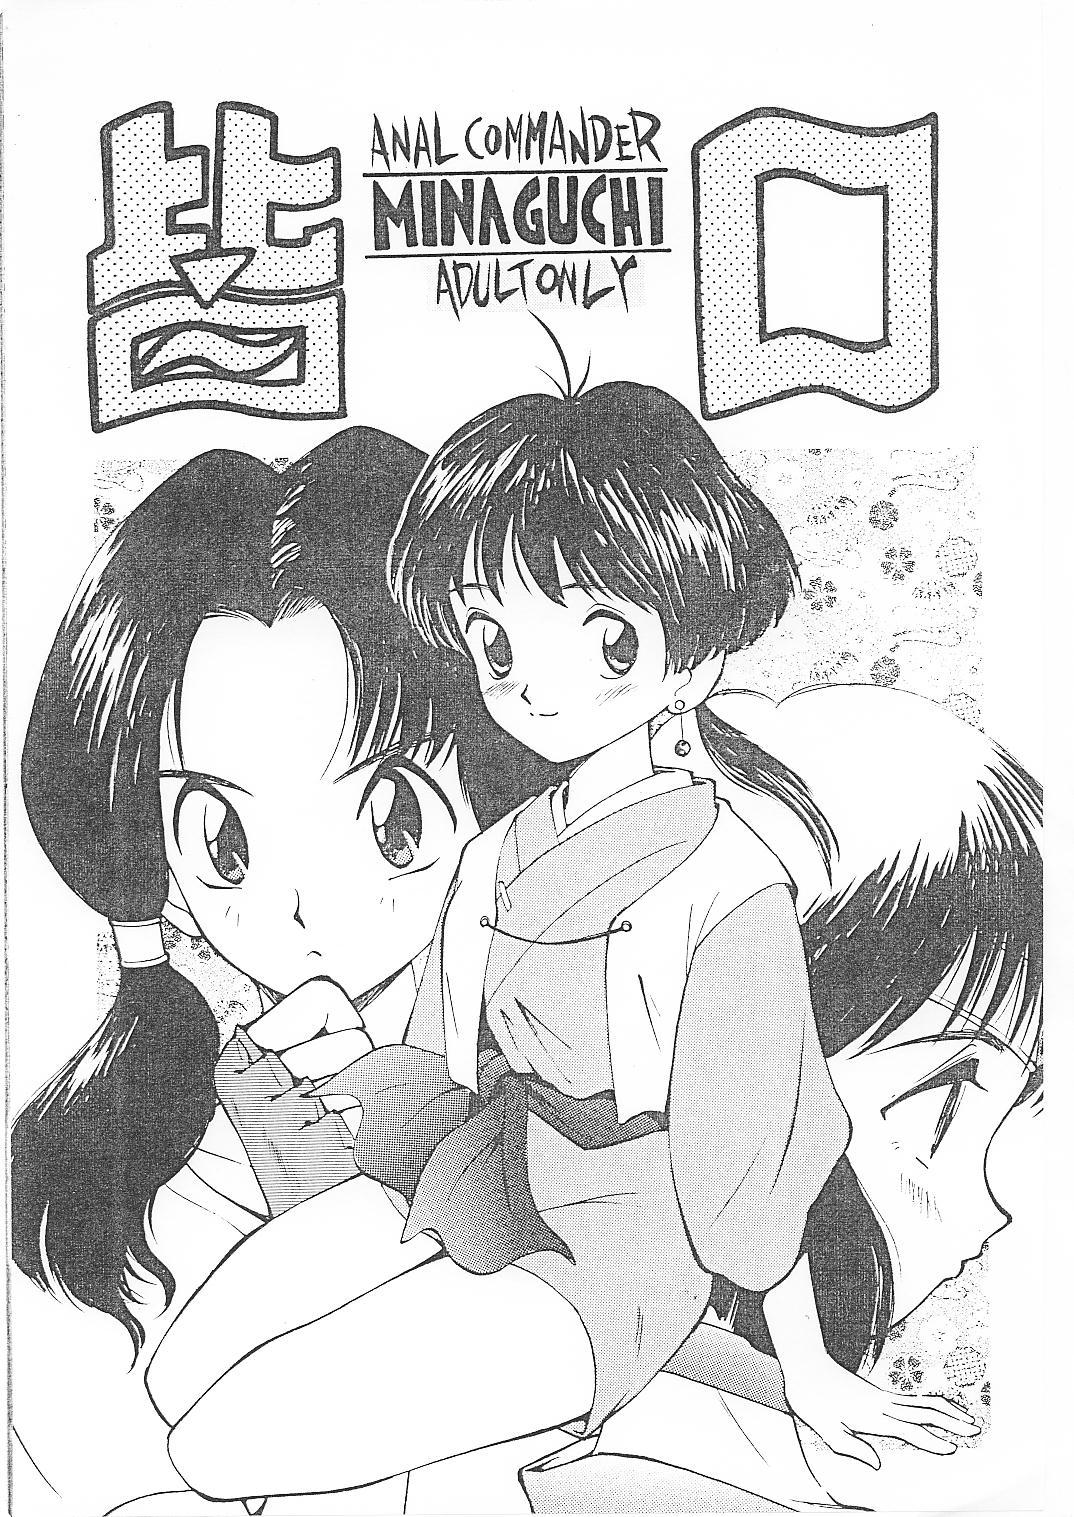 Tiny Minaguchi - Anal Commander Minaguchi - Sailor moon Dragon ball z Final fantasy Satin - Page 1